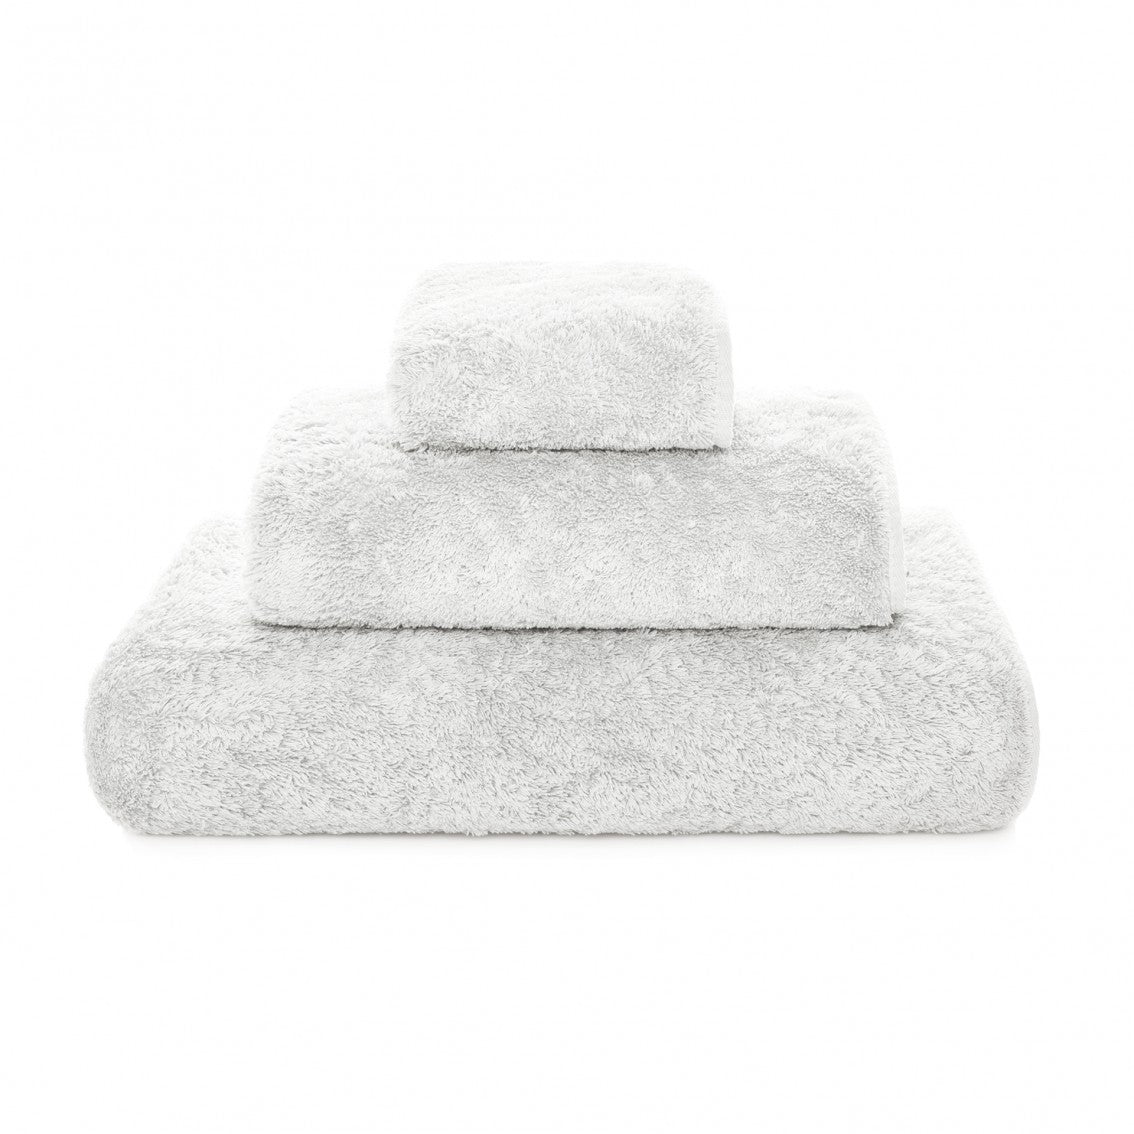 Graccioza Egoist Cloud Bath Towels - Luxurious Beds and Linens